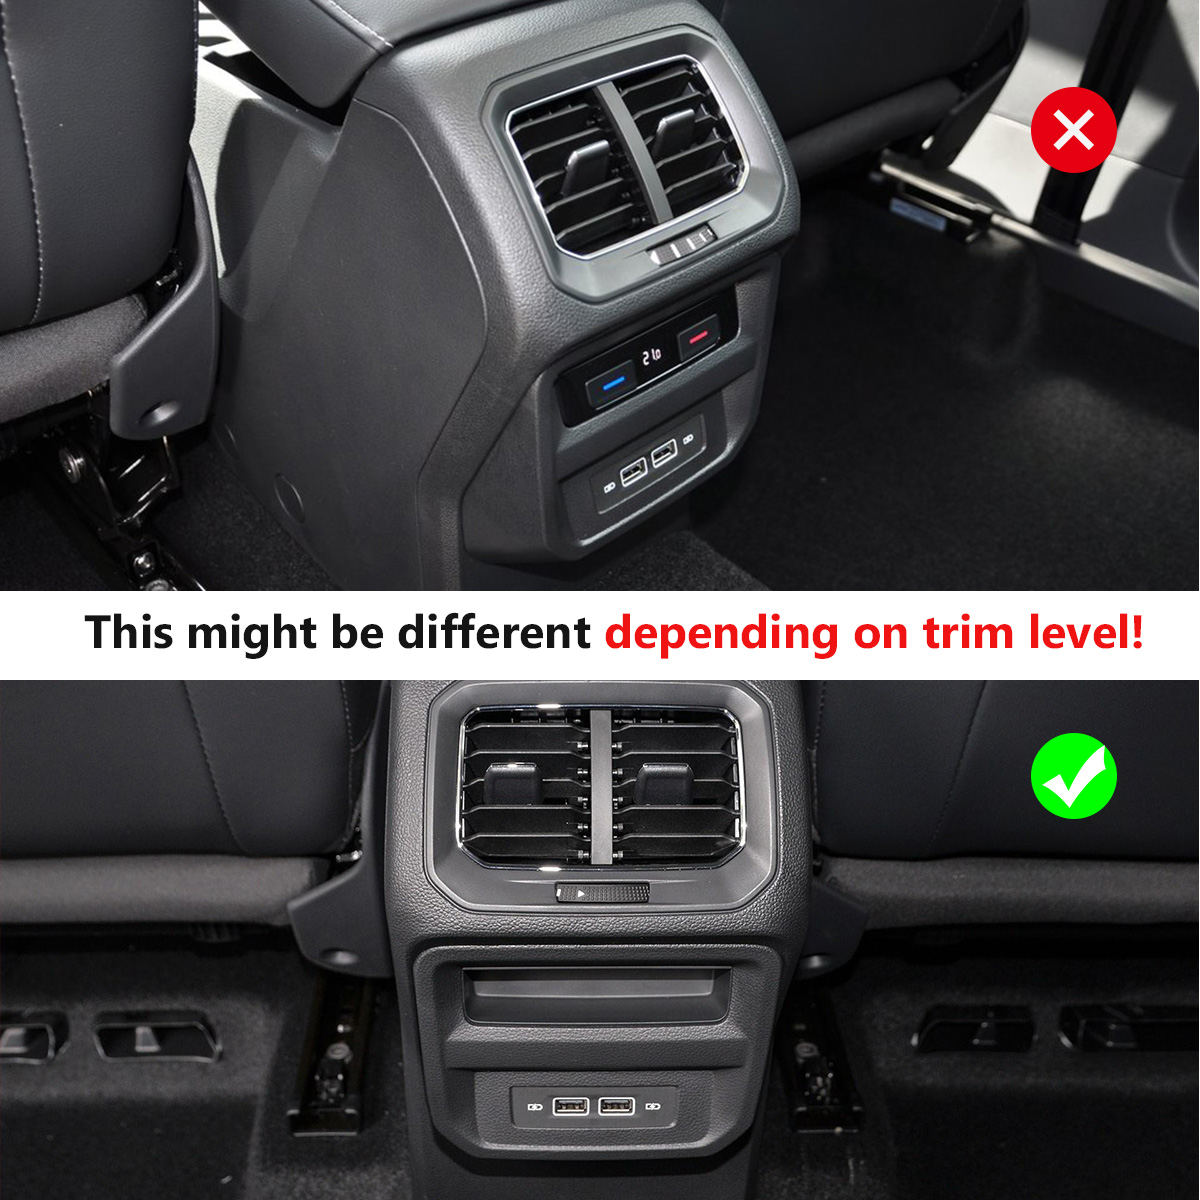 Premium Cup Holder and Door Pocket Inserts 16-pc Set Console Blue Trim CupHolderHero for Volkswagen VW Tiguan 2018-2020 Custom Liners Accessories 